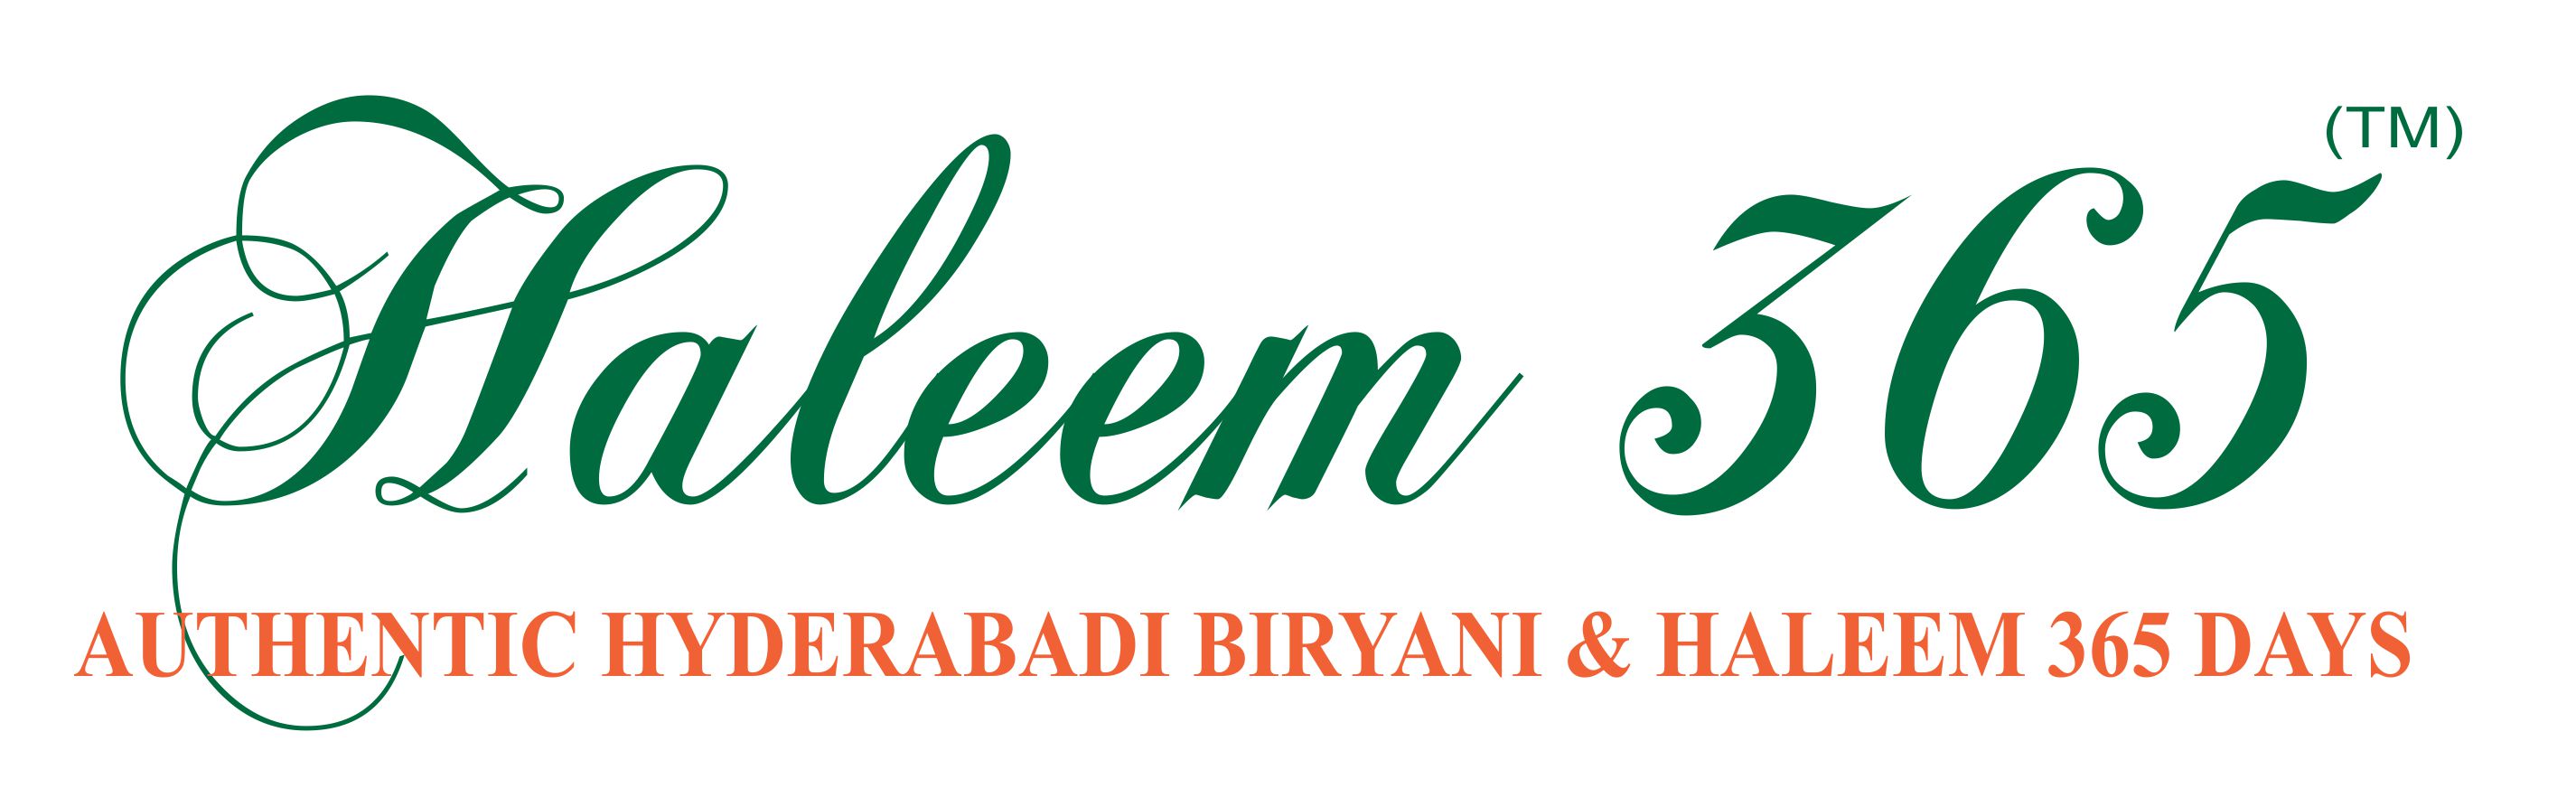 Haleem 365 logo